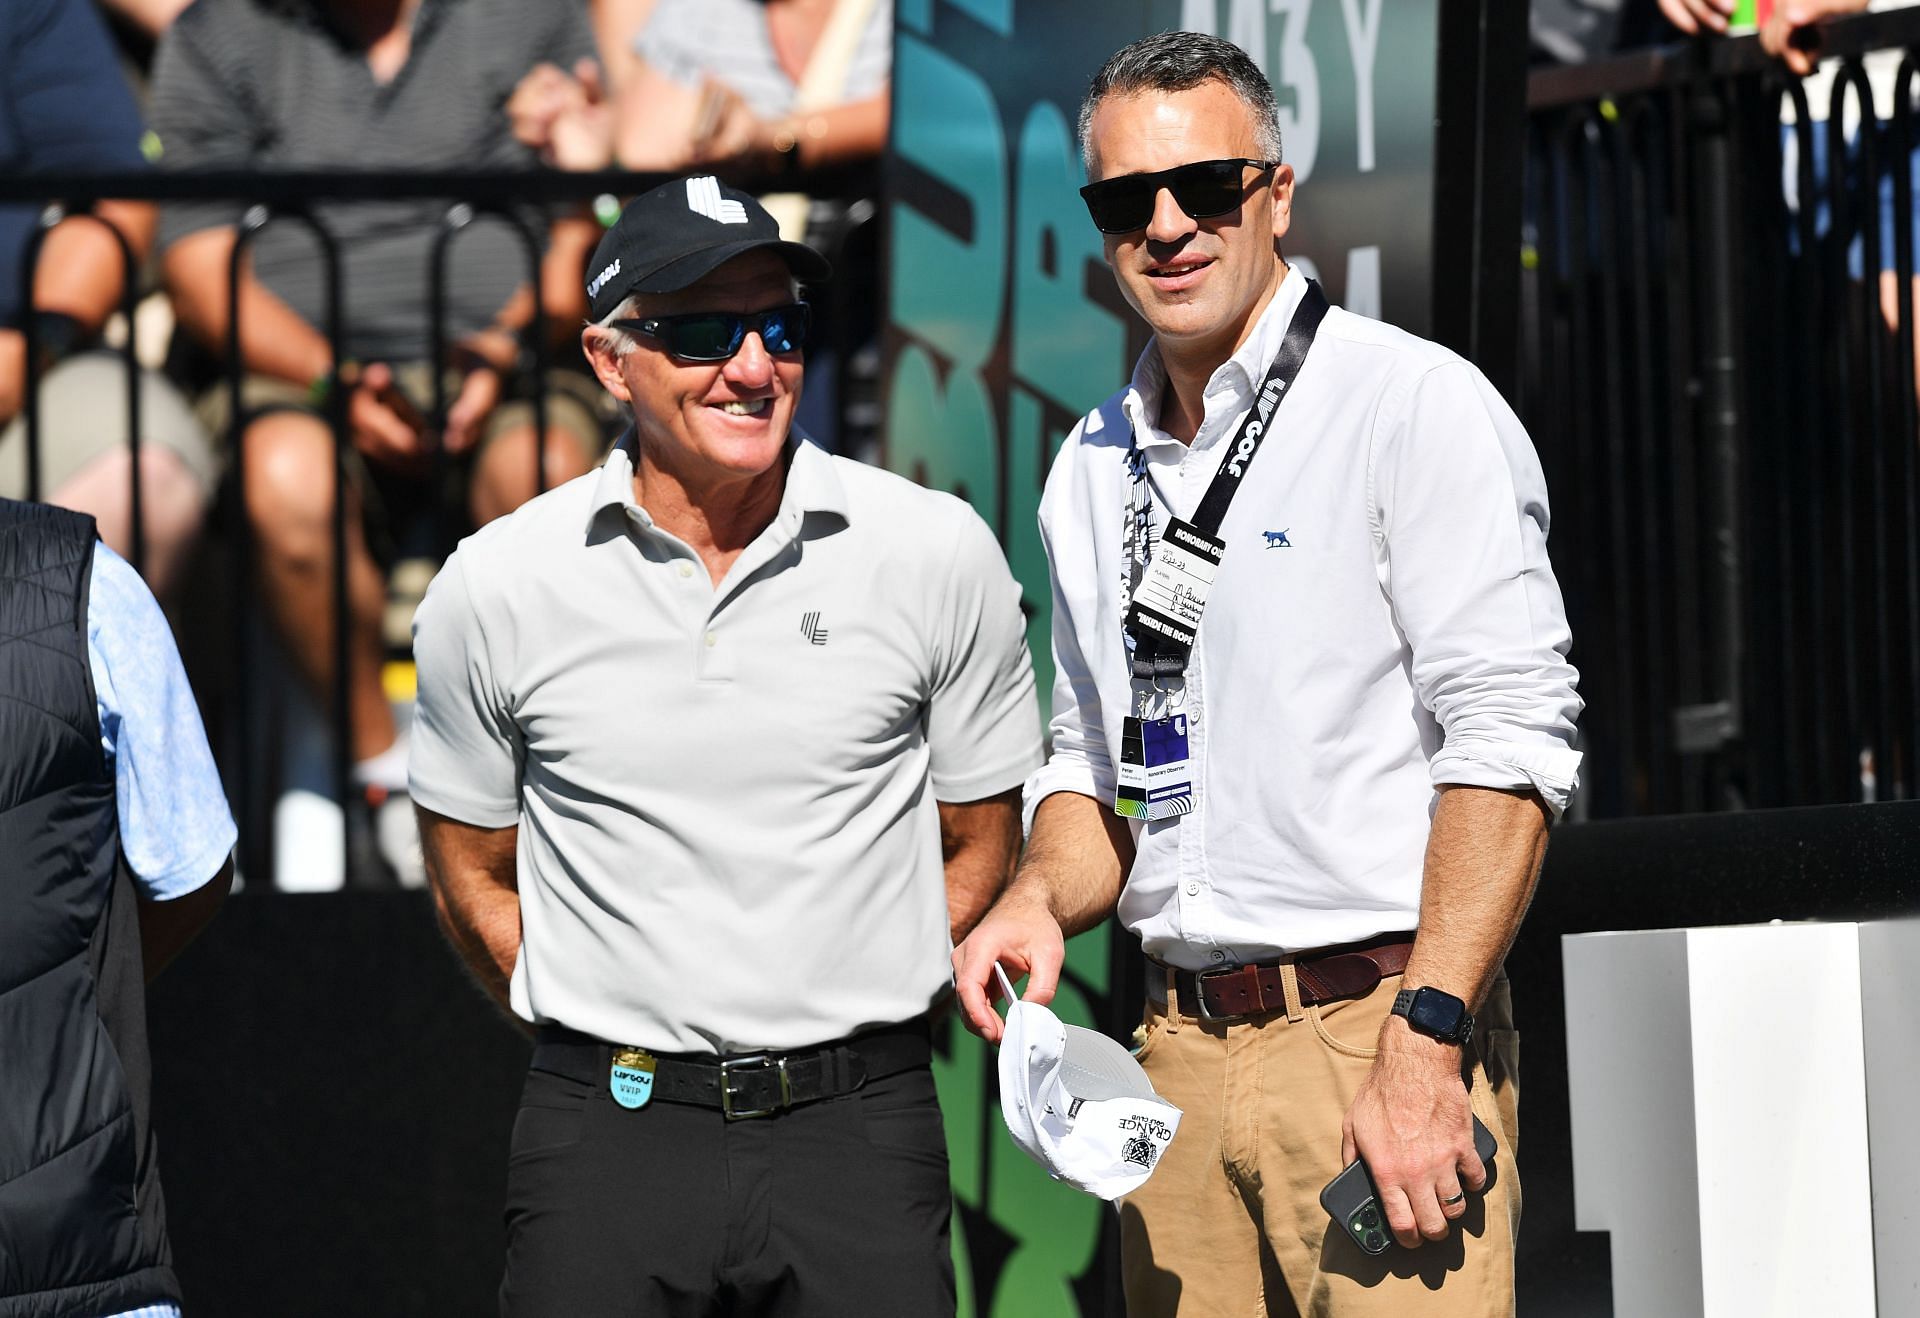 Greg Norman may have won the PGA Tour-LIV Golf merger